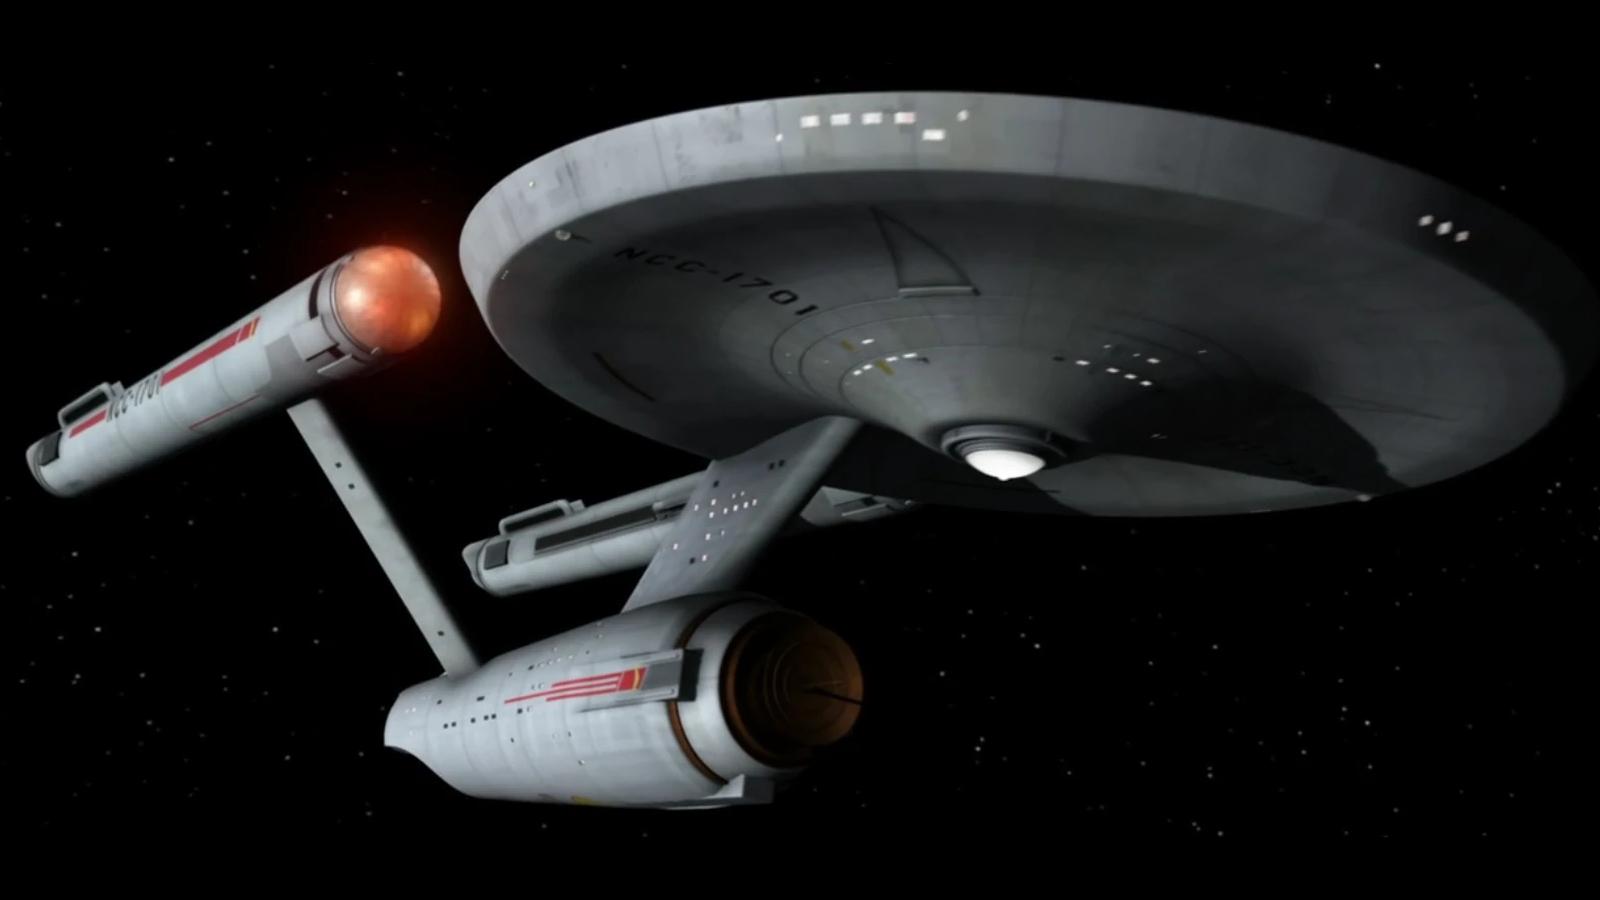 A promotional still of the USS Enterprise (NCC-1701) from Star Trek: The Original Series.